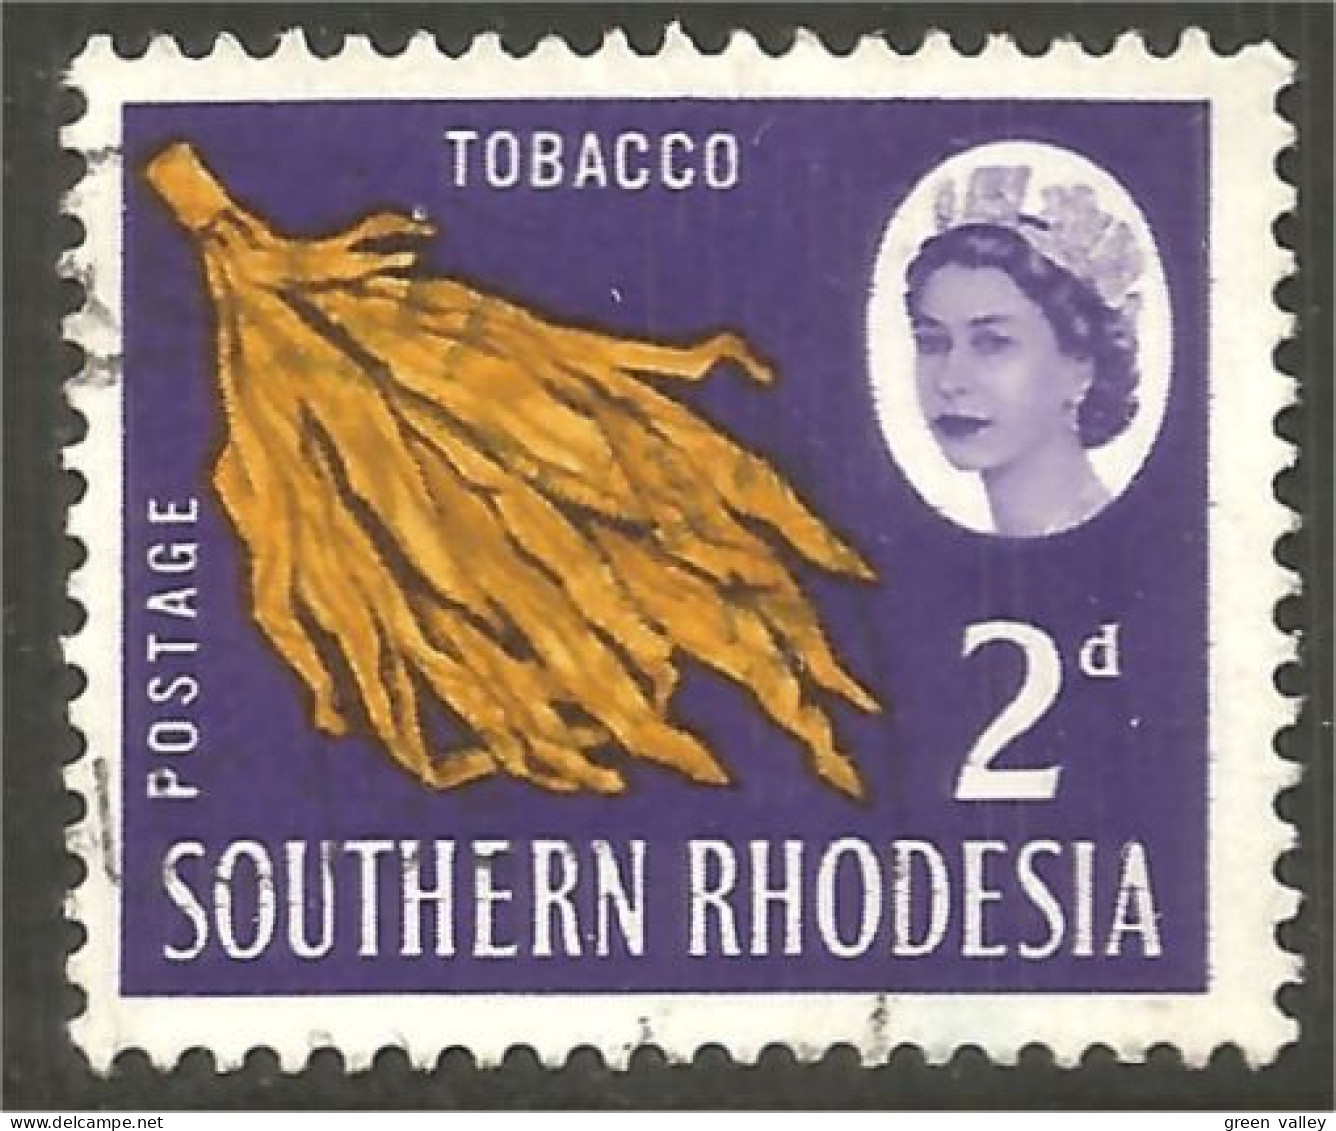 AL-1 Rhodesia Tabac Tabak Tobacco Tabaco Tabacco - Tobacco